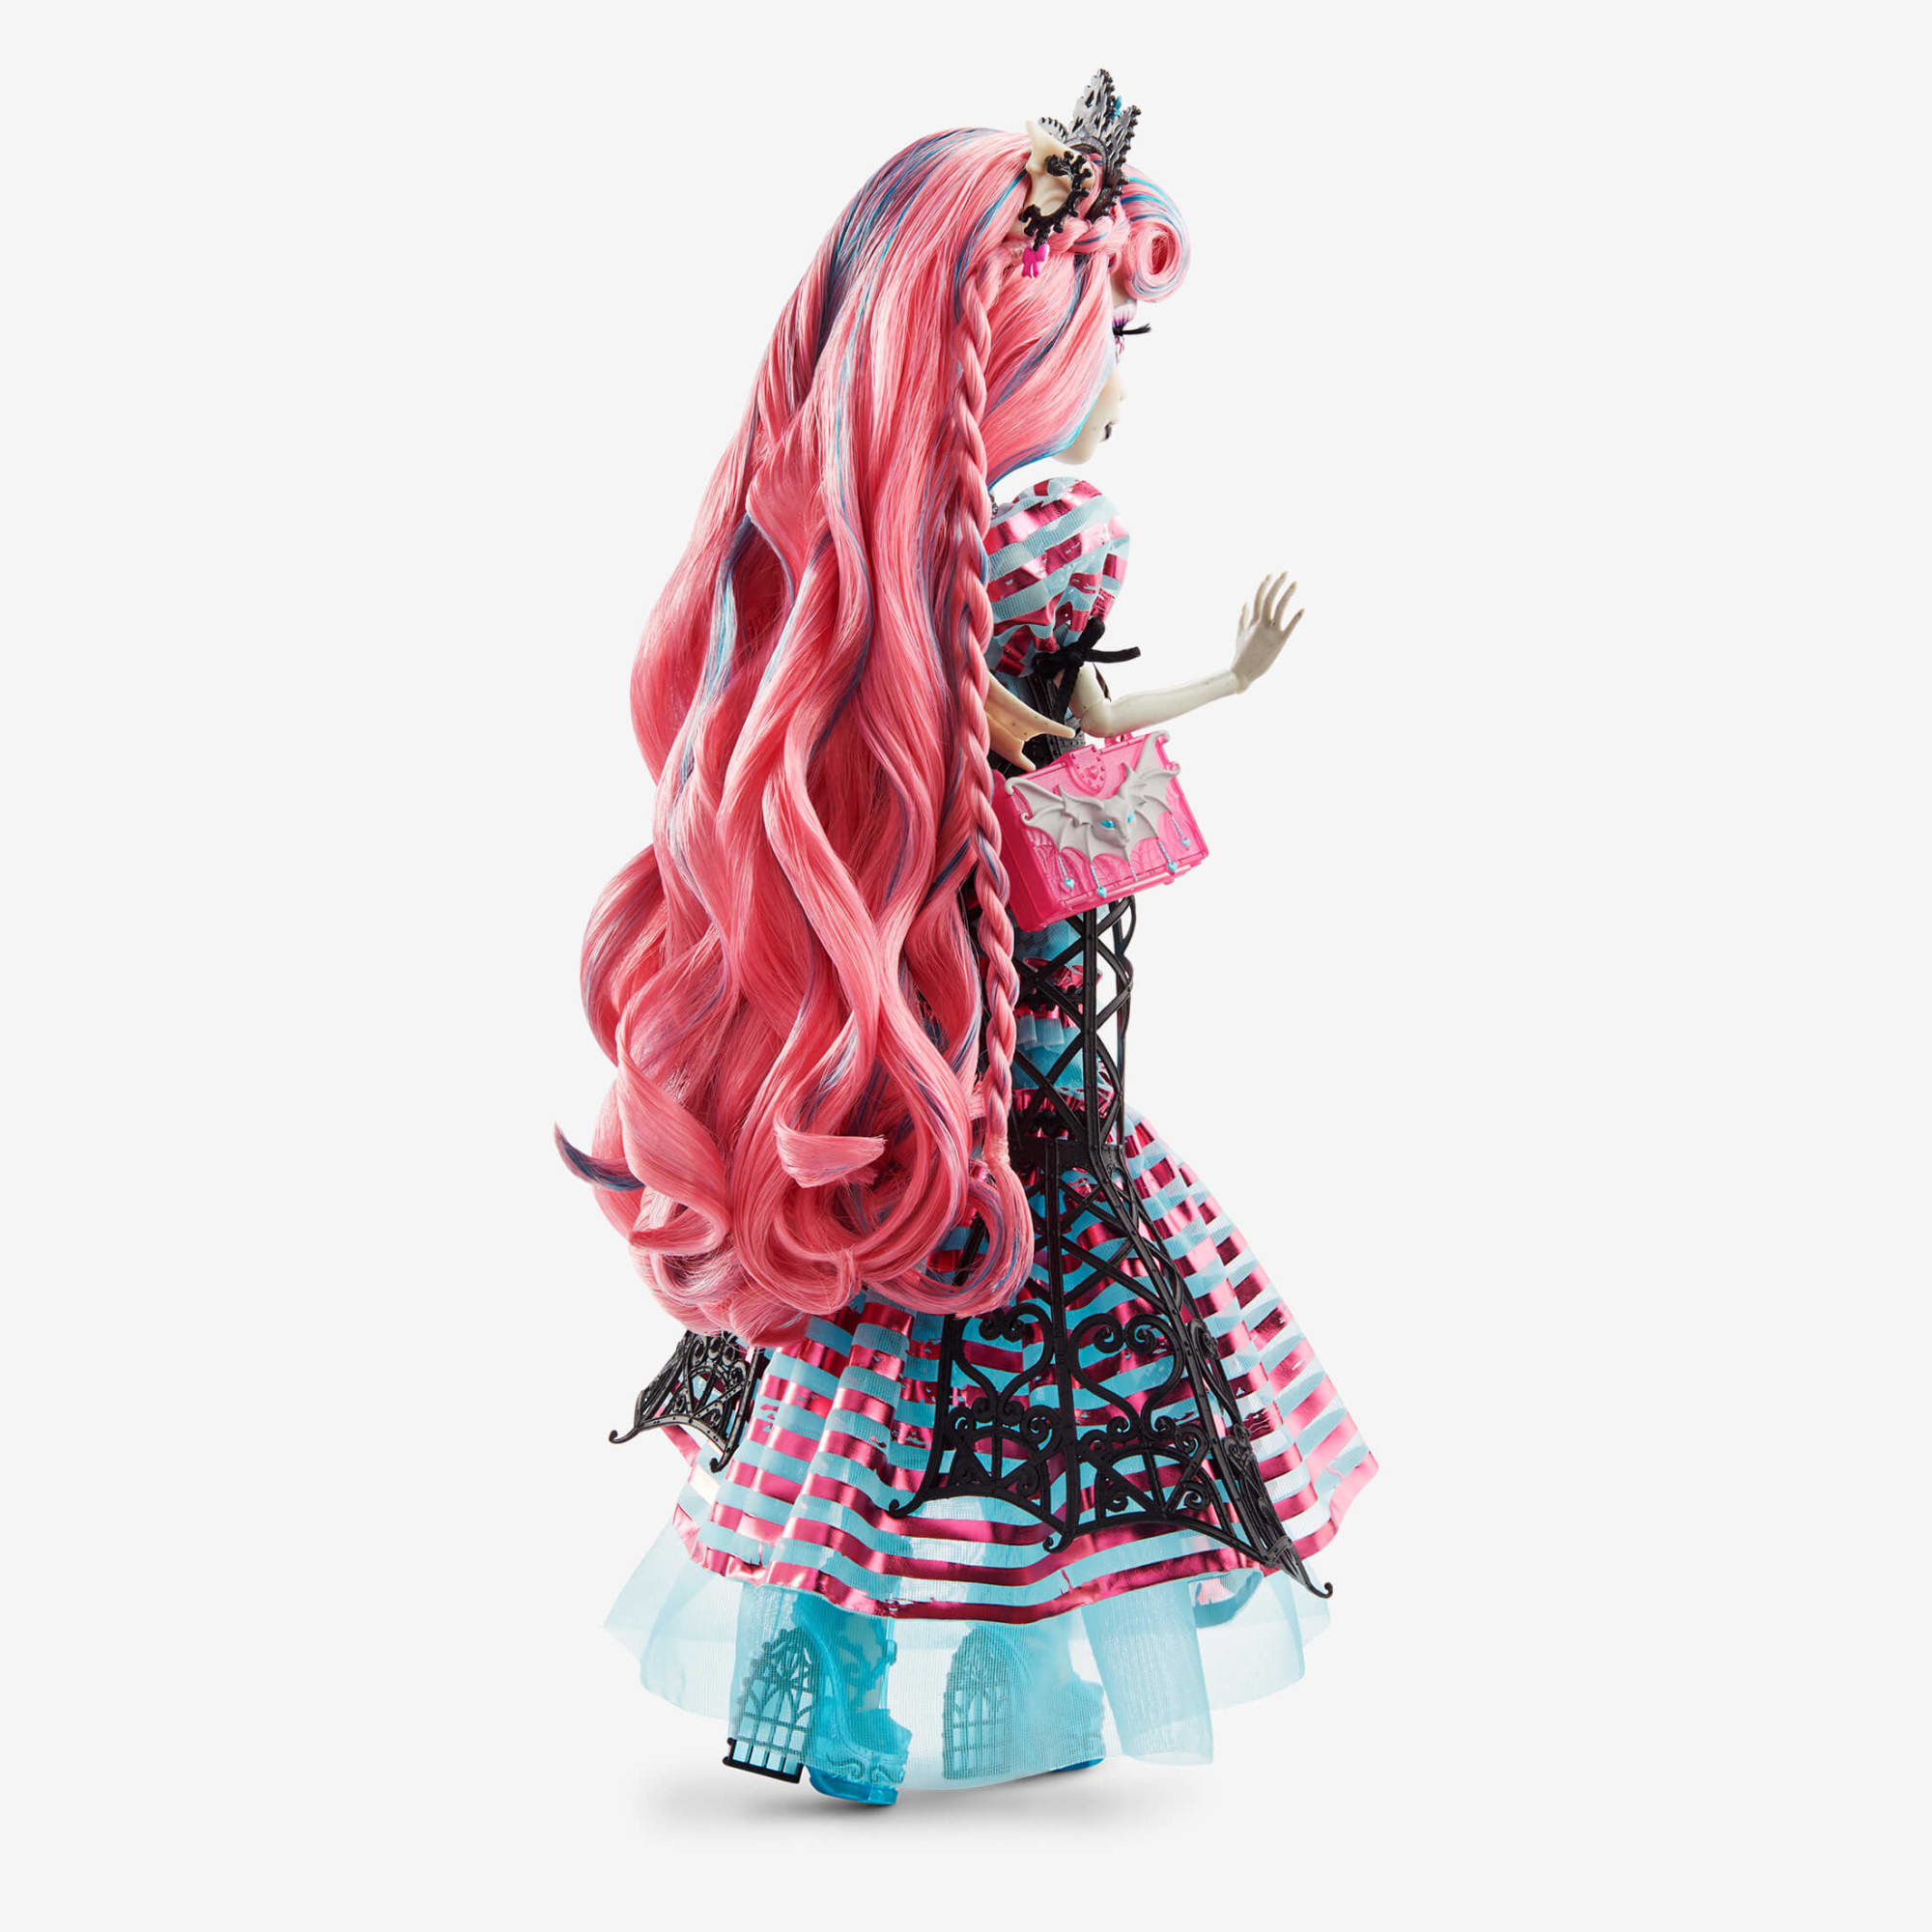 Monster High Fang Vote Rochelle Goyle Doll – Mattel Creations